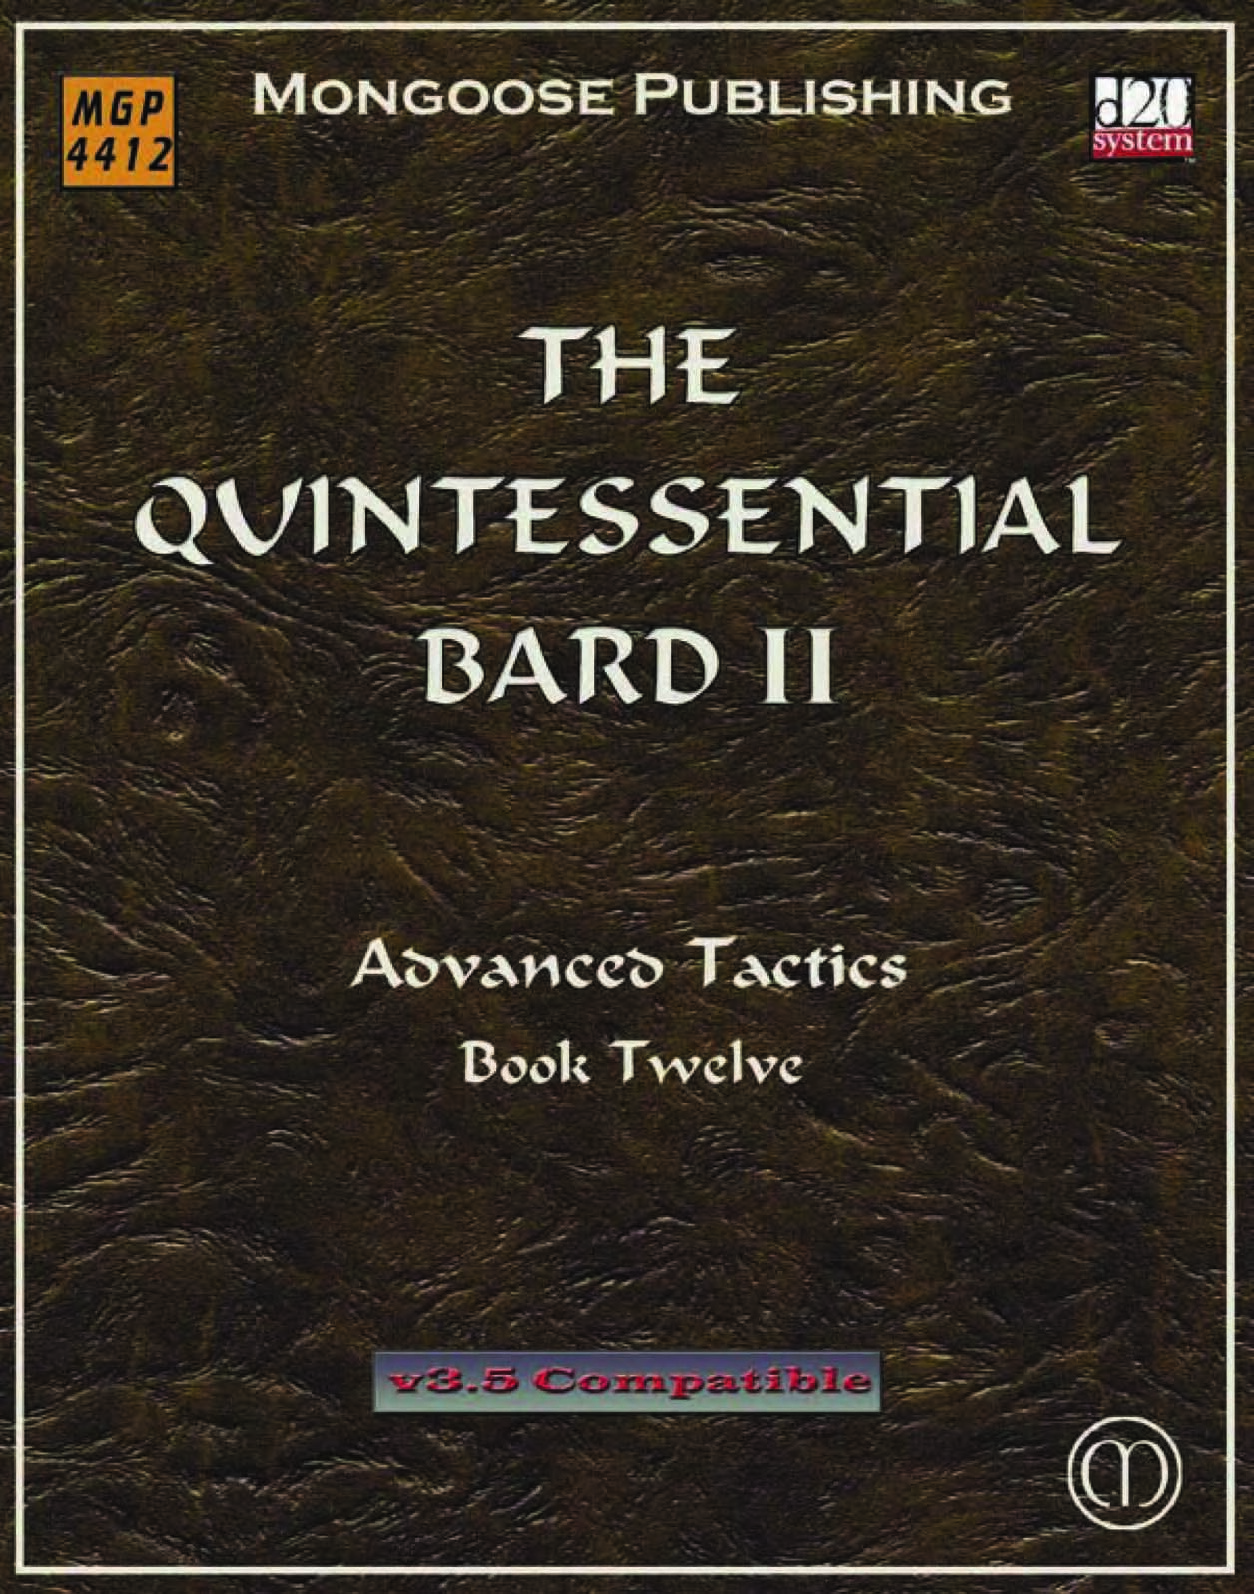 The Quintessential Bard II